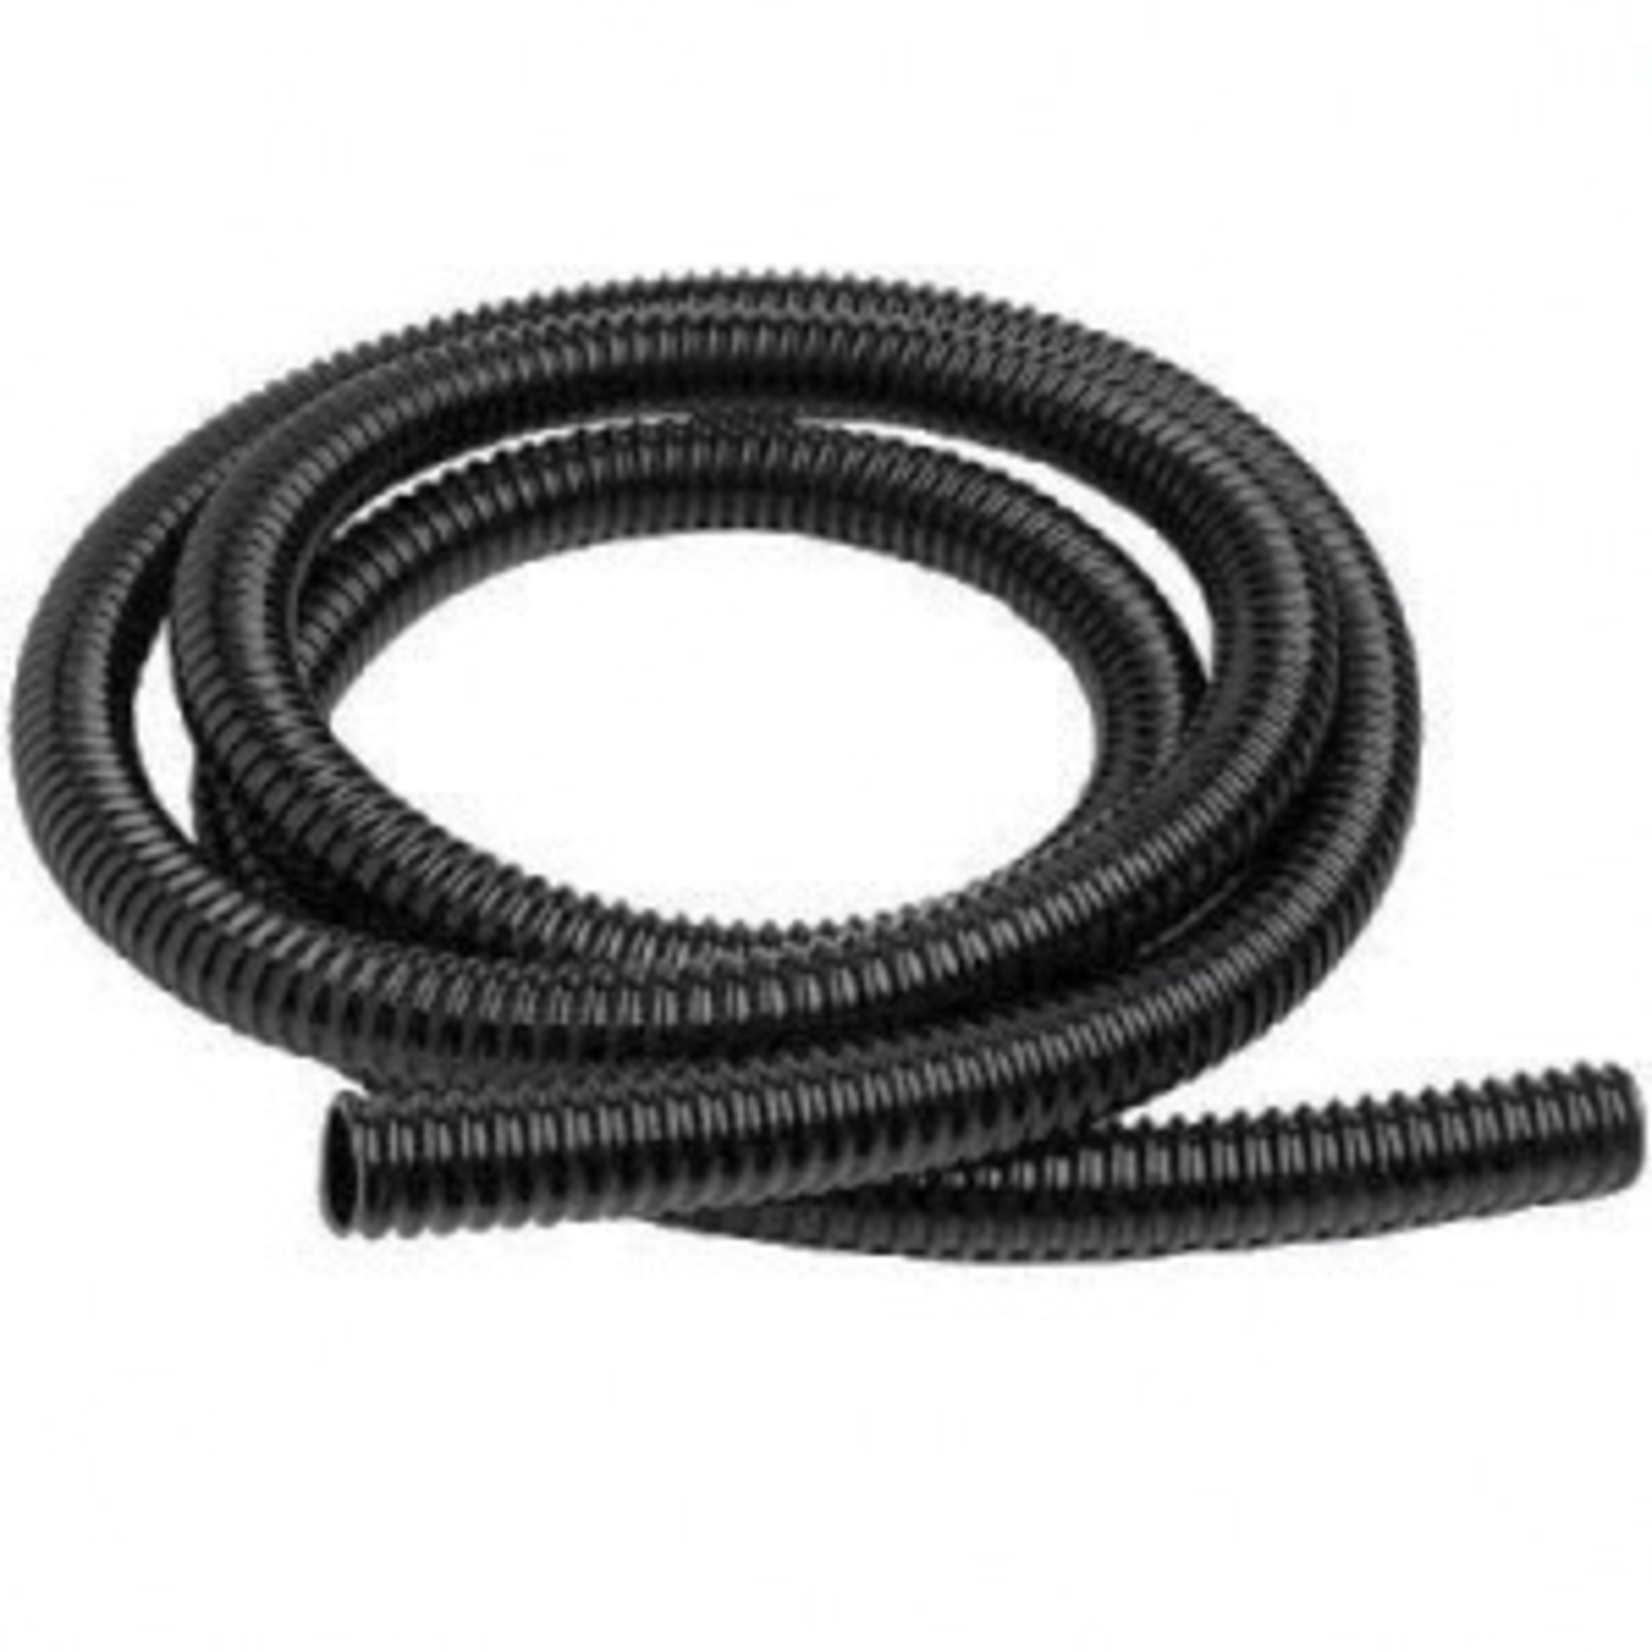 LAGUNA (D) Laguna Non-Kink Tubing hose , 38 mm (1.5") ($4.99/ft)